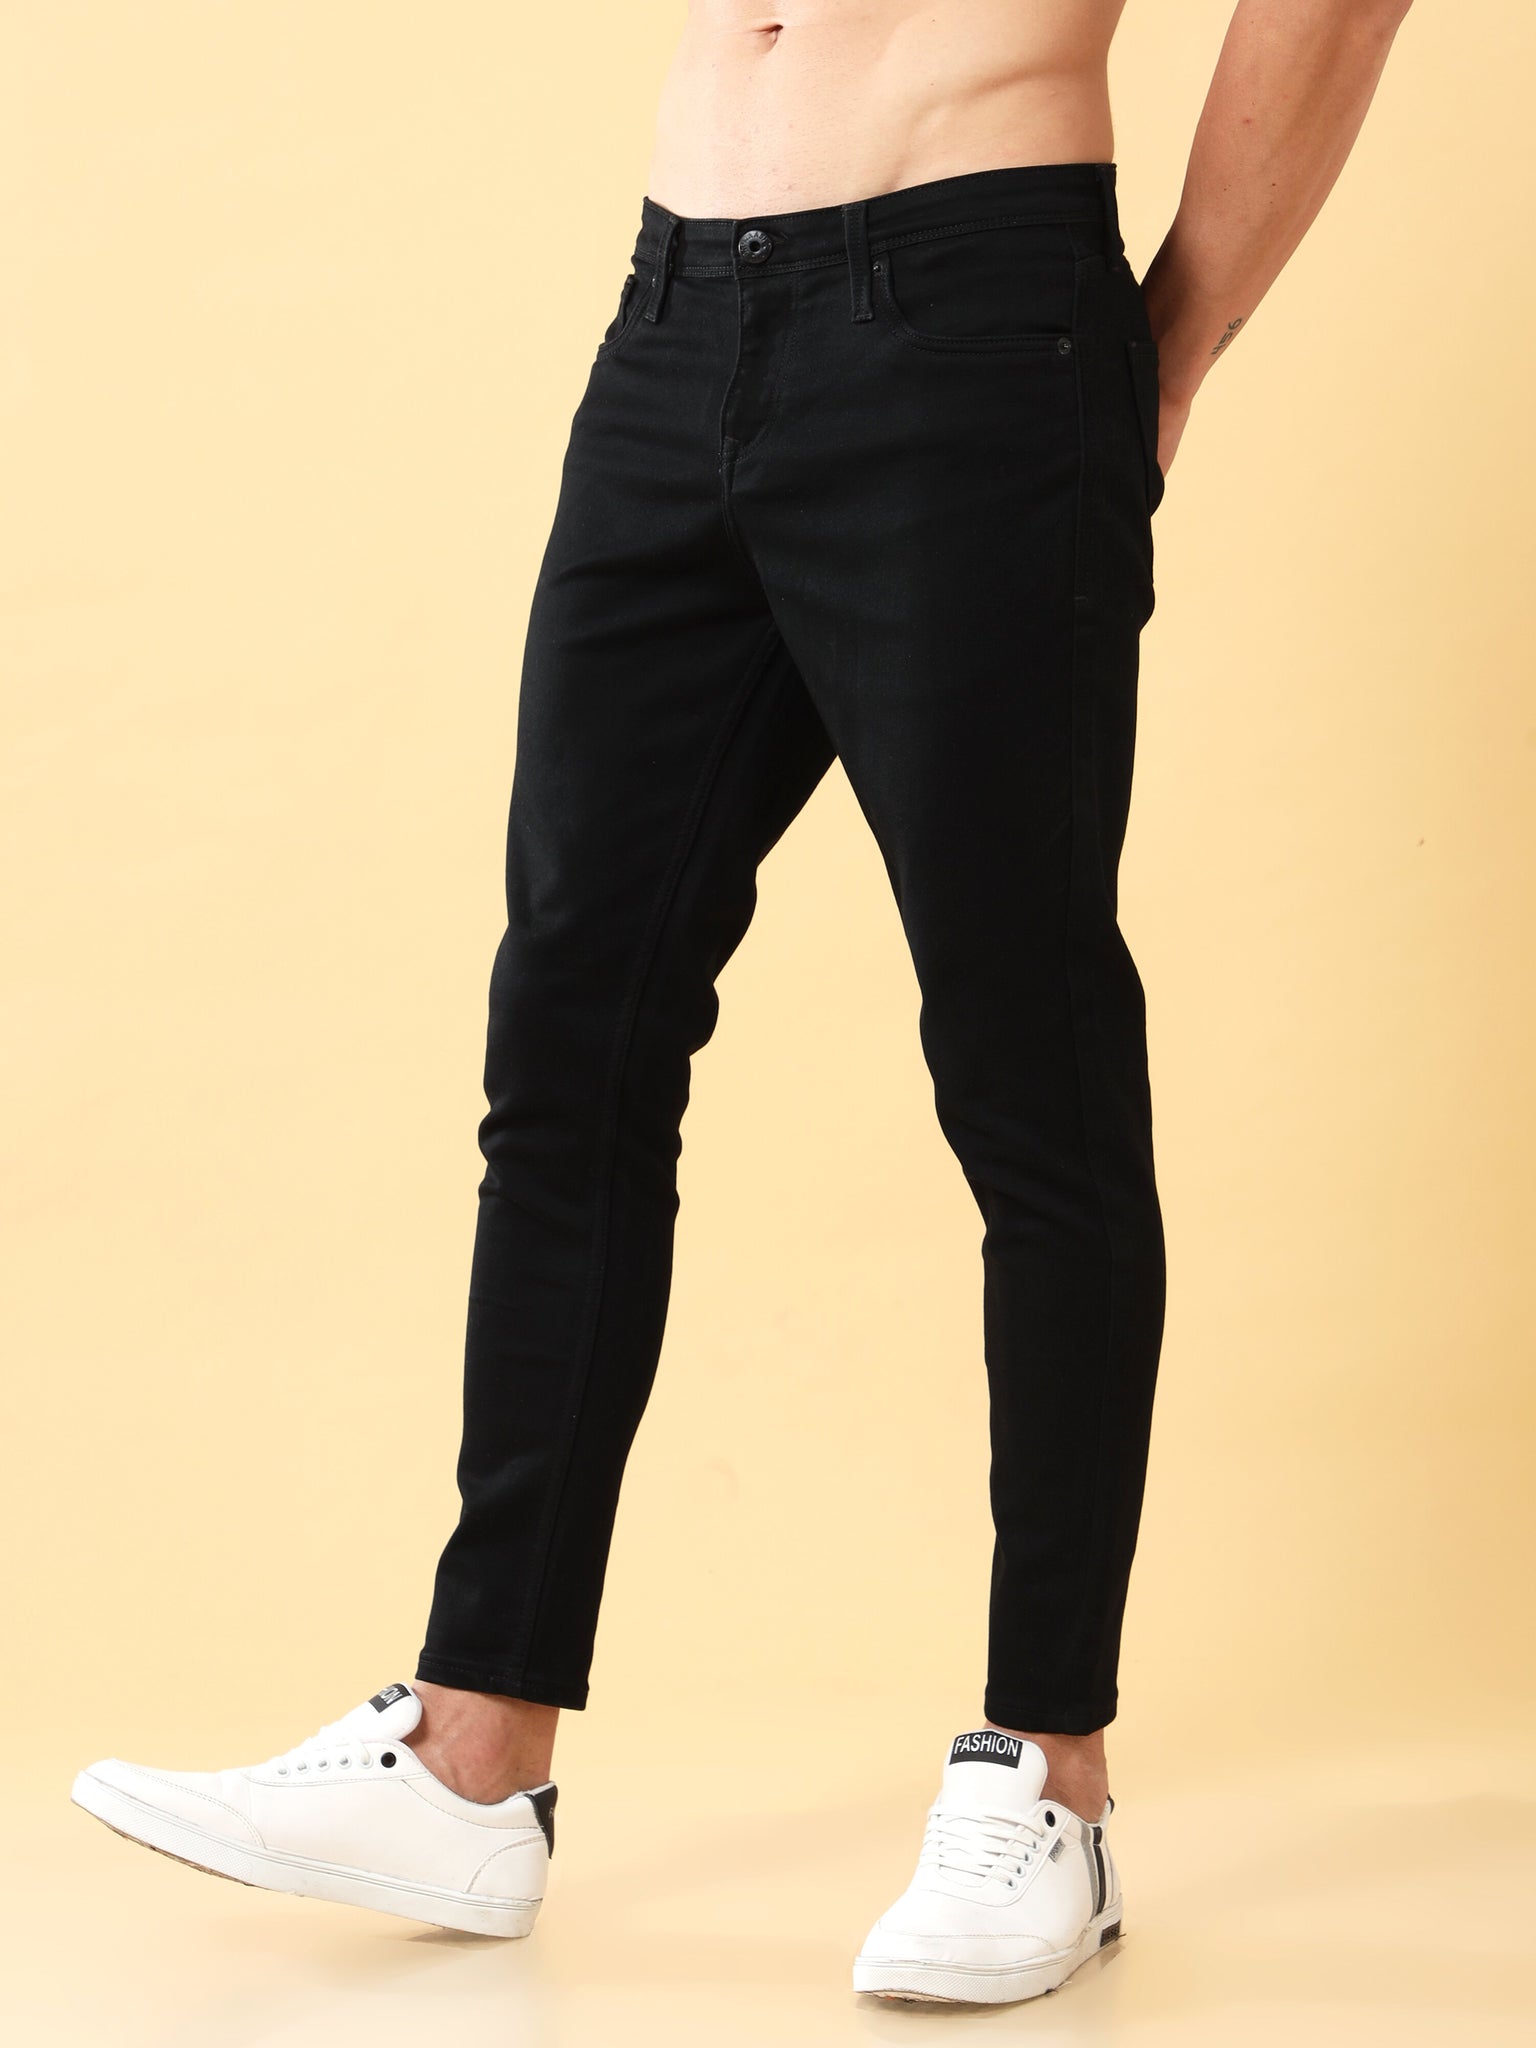 Buy Classic Jet Black Jeans for Men Online at Great Price – Badmaash